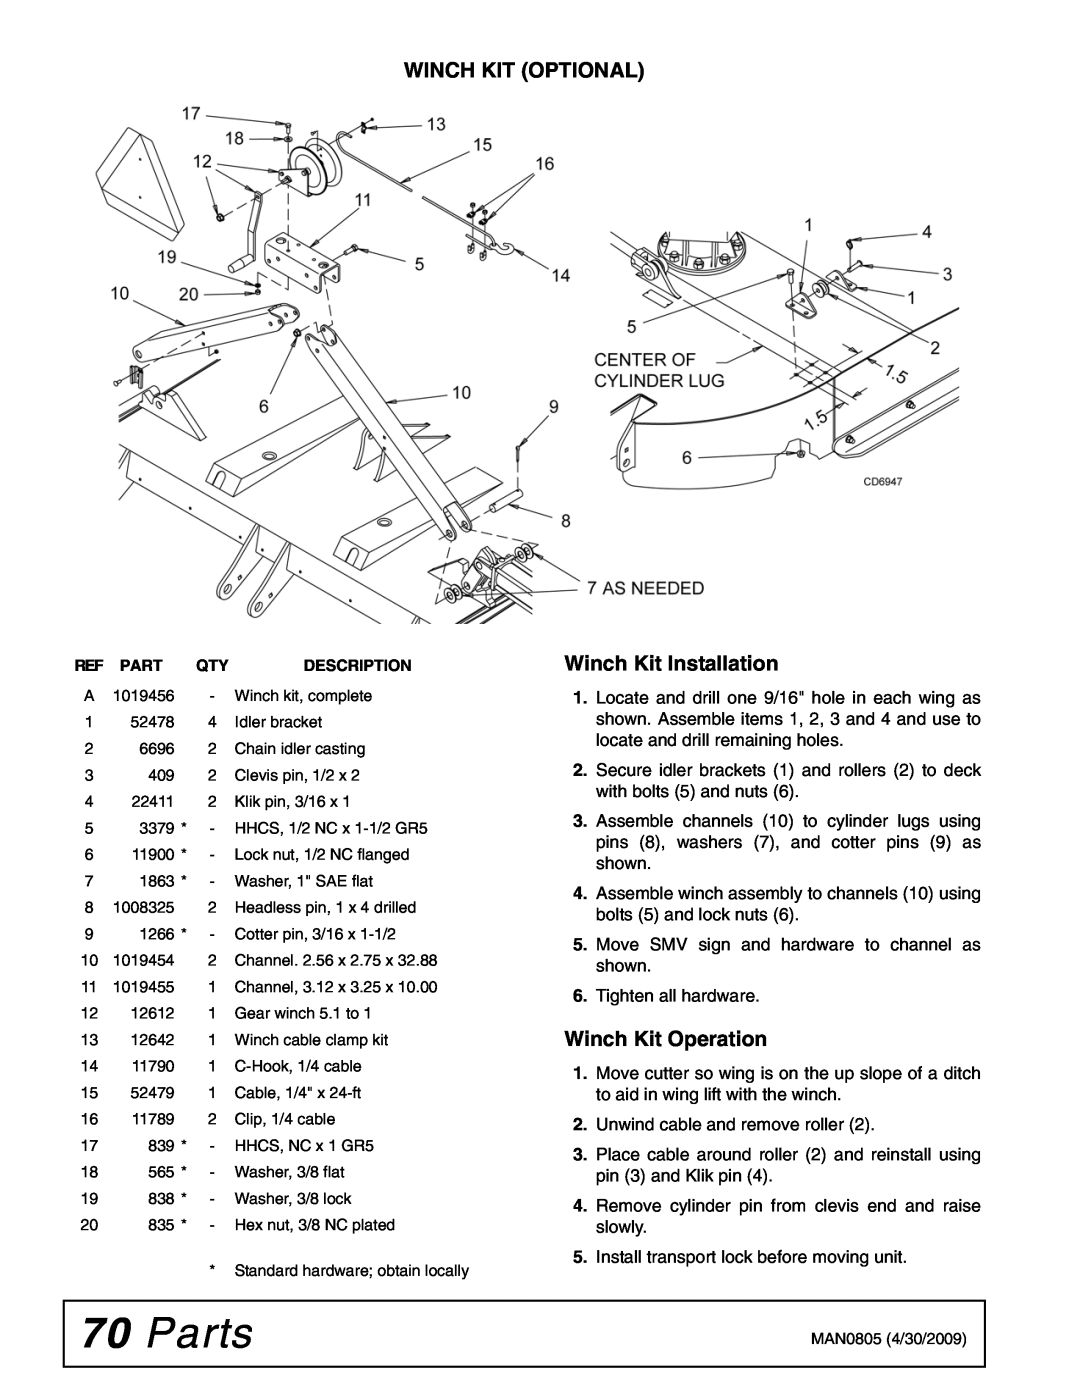 Woods Equipment BW180HBQ, BW126HBQ manual Parts, Winch Kit Optional, Winch Kit Installation, Winch Kit Operation 